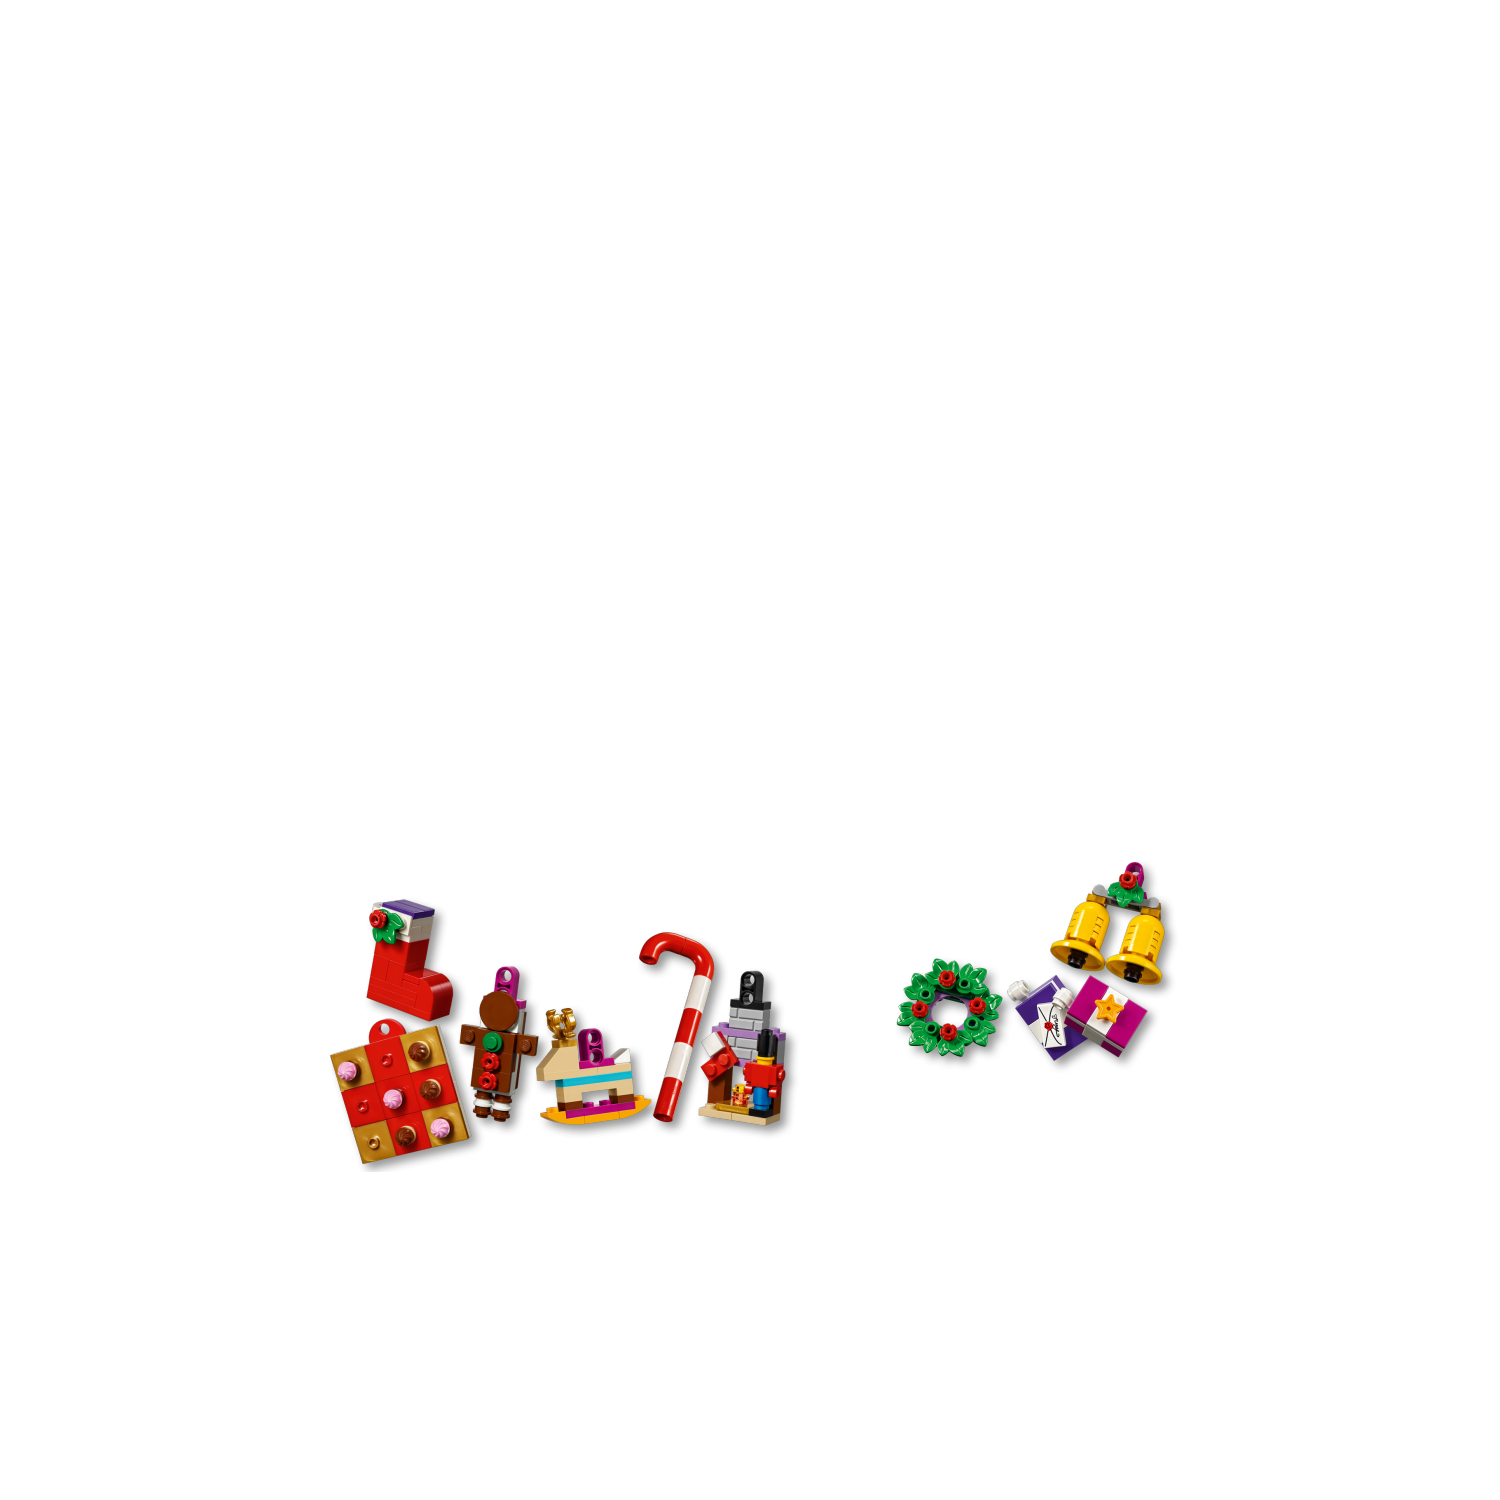 41353 LEGO® Friends Advent kalendar